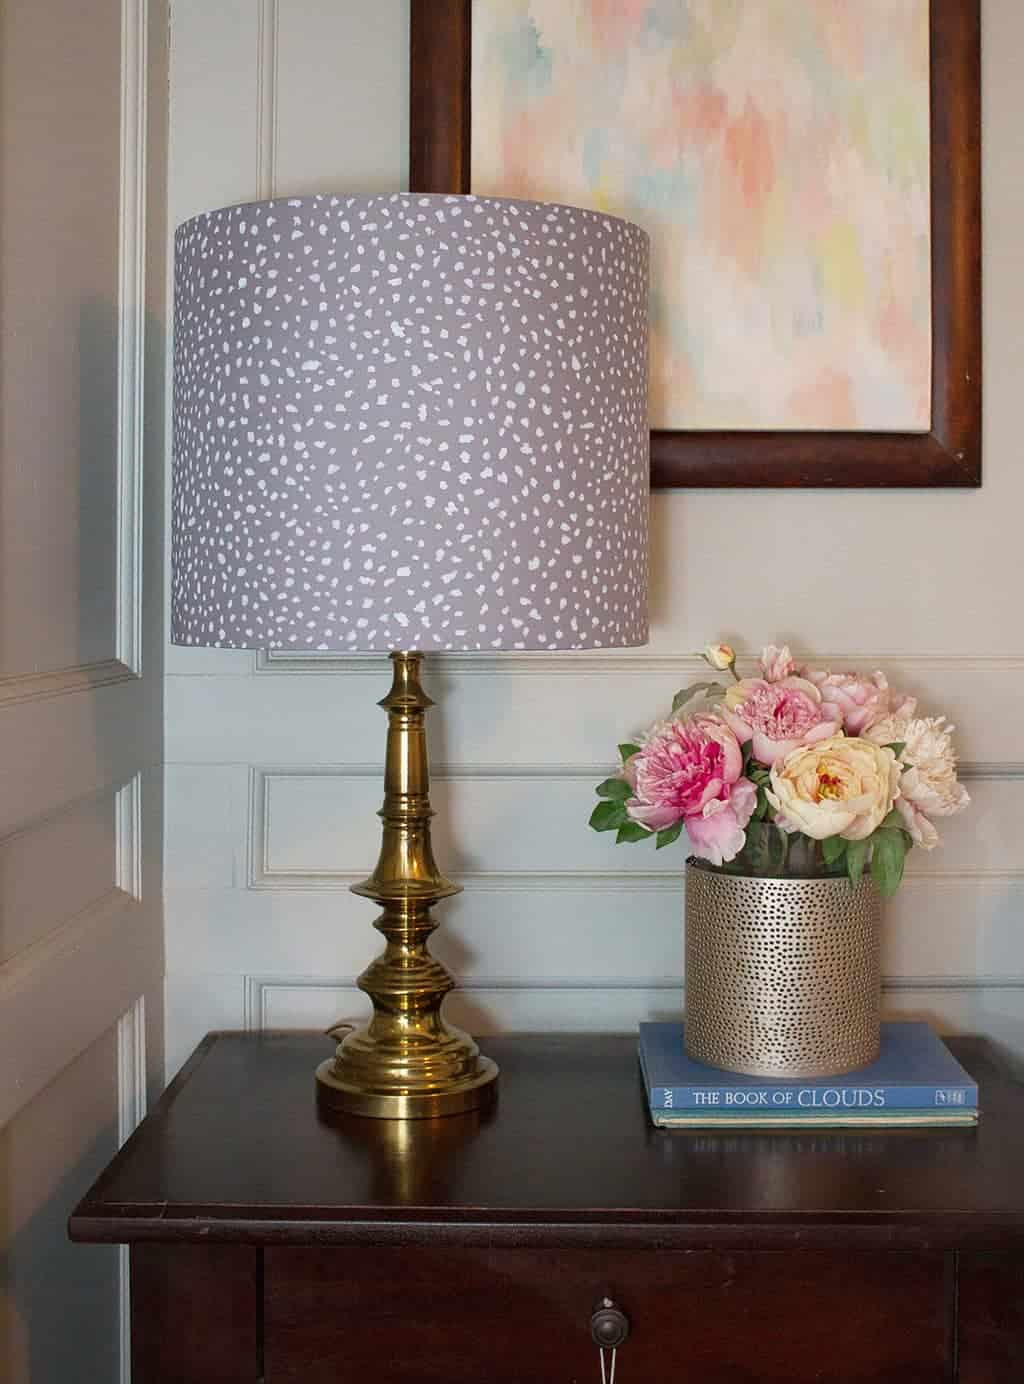 DIY Lamp Shade Kit
 Make your own DIY lamp shade from an I Like That lamp kit